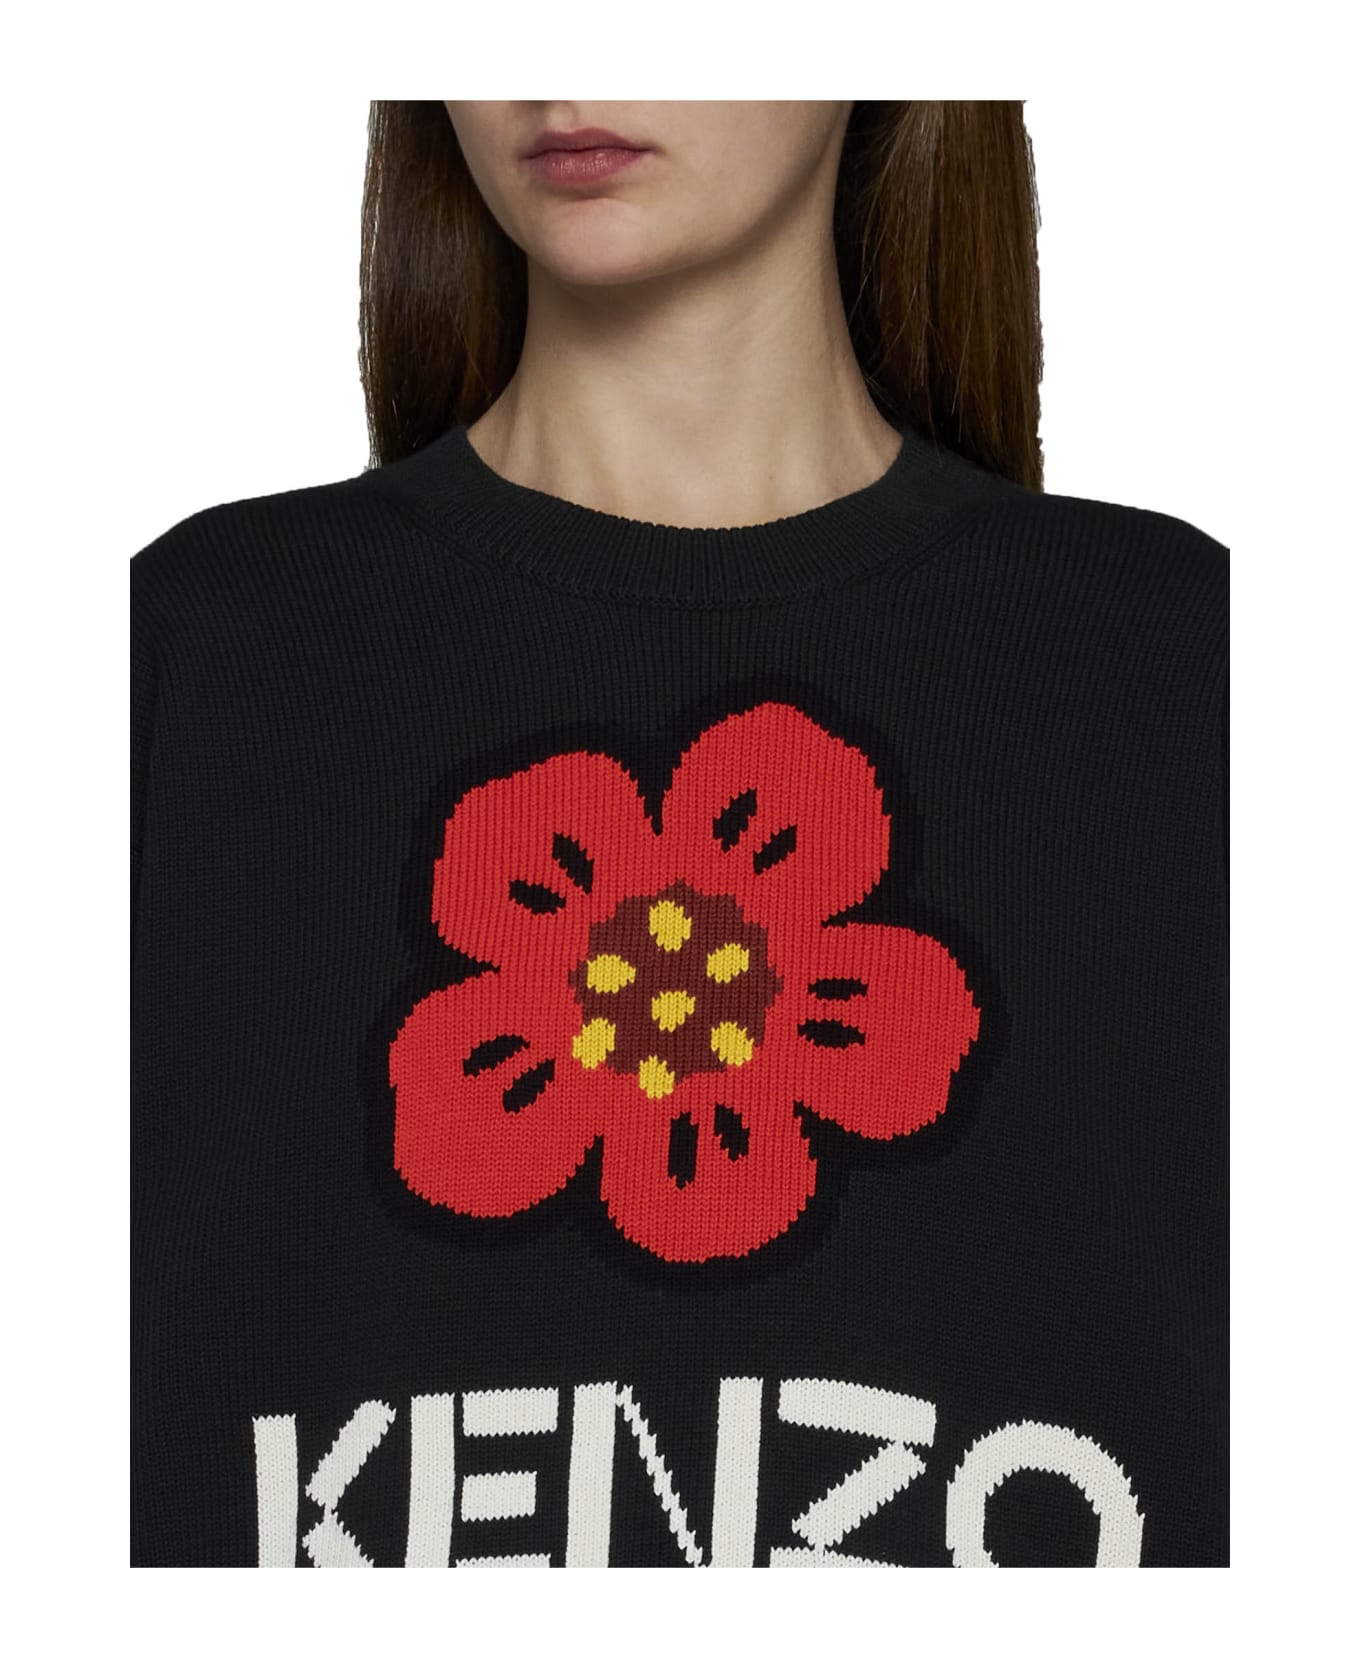 Kenzo Sweater - Black フリース